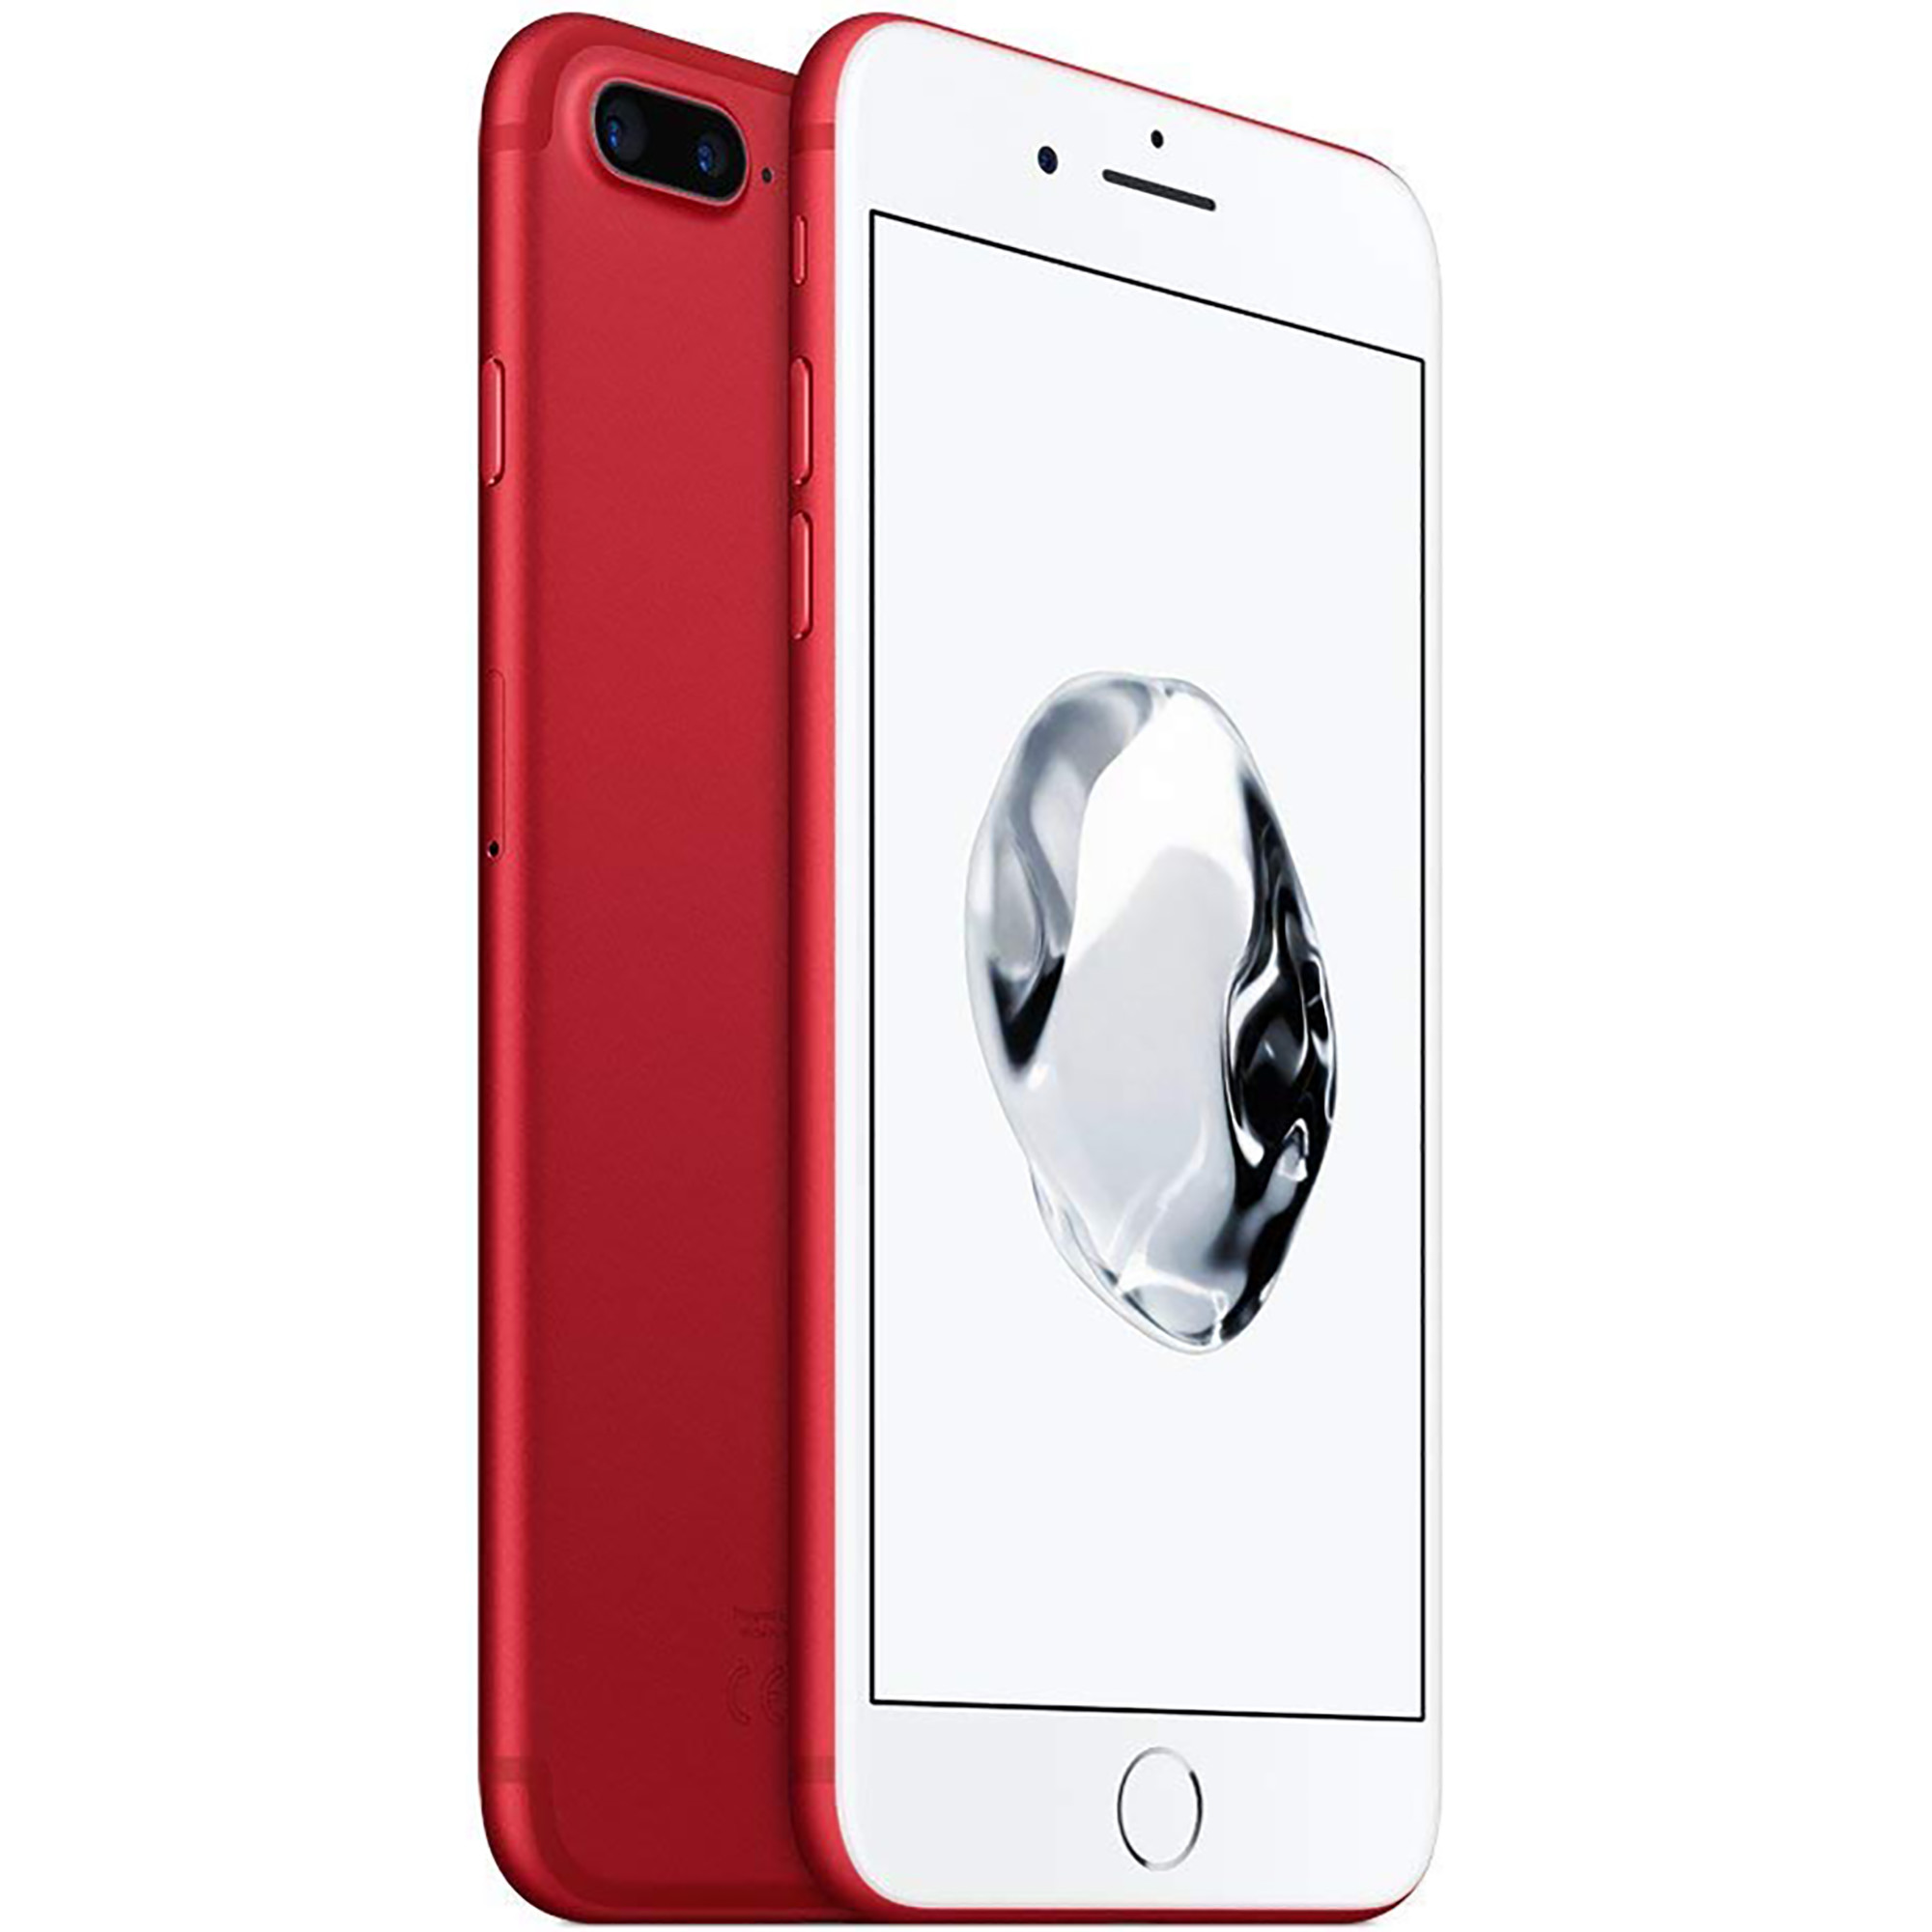 Restored Apple iPhone 7 PLUS 256GB Unlocked (GSM, not CDMA), RED (Refurbished) - image 4 of 4